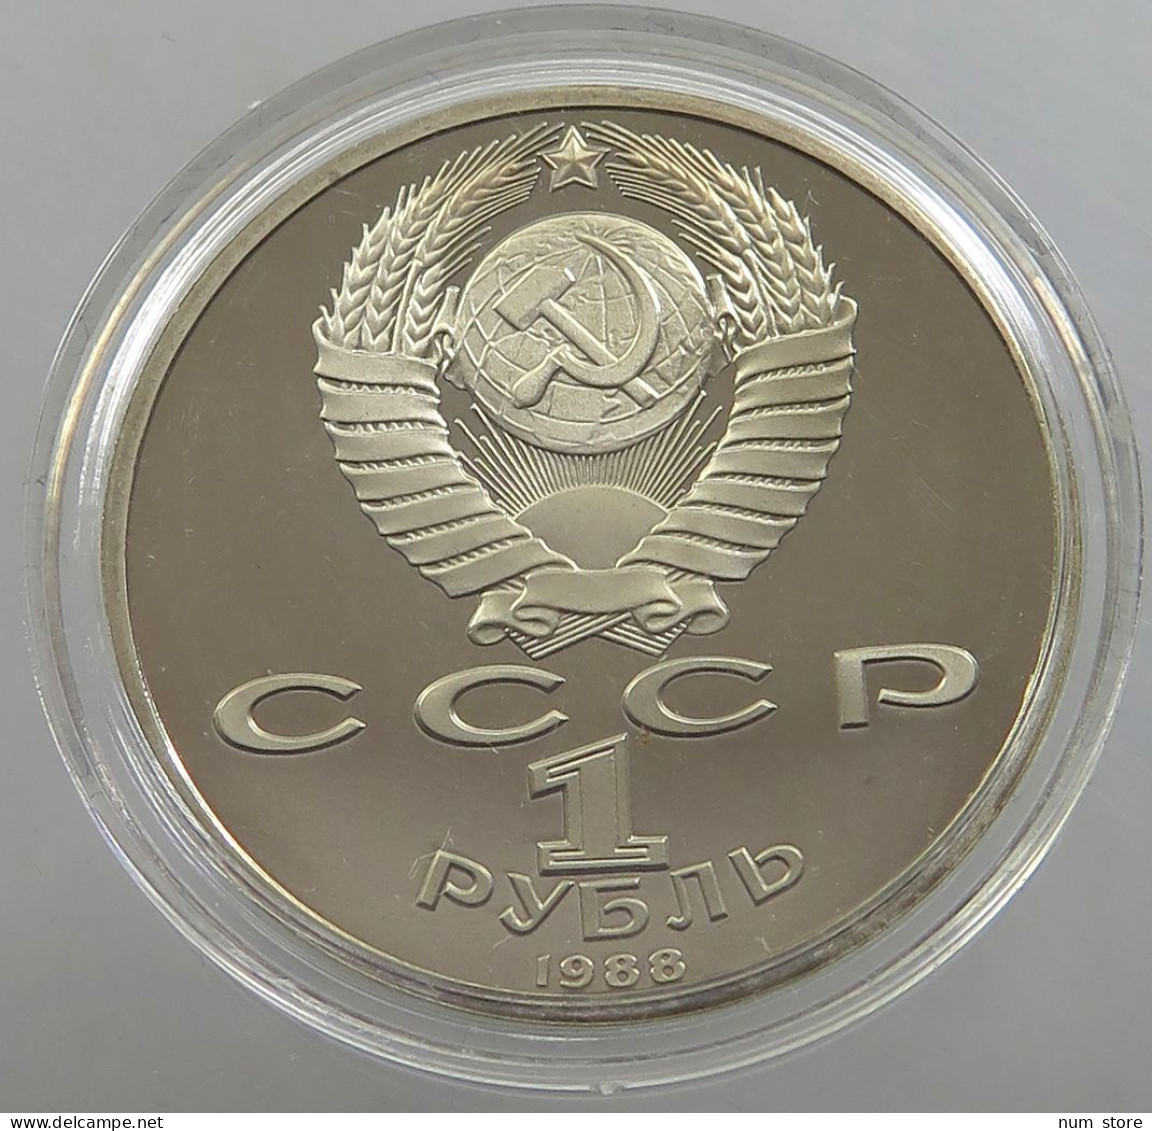 RUSSIA USSR 1 ROUBLE 1988 GORKI PROOF #sm14 0537 - Russia